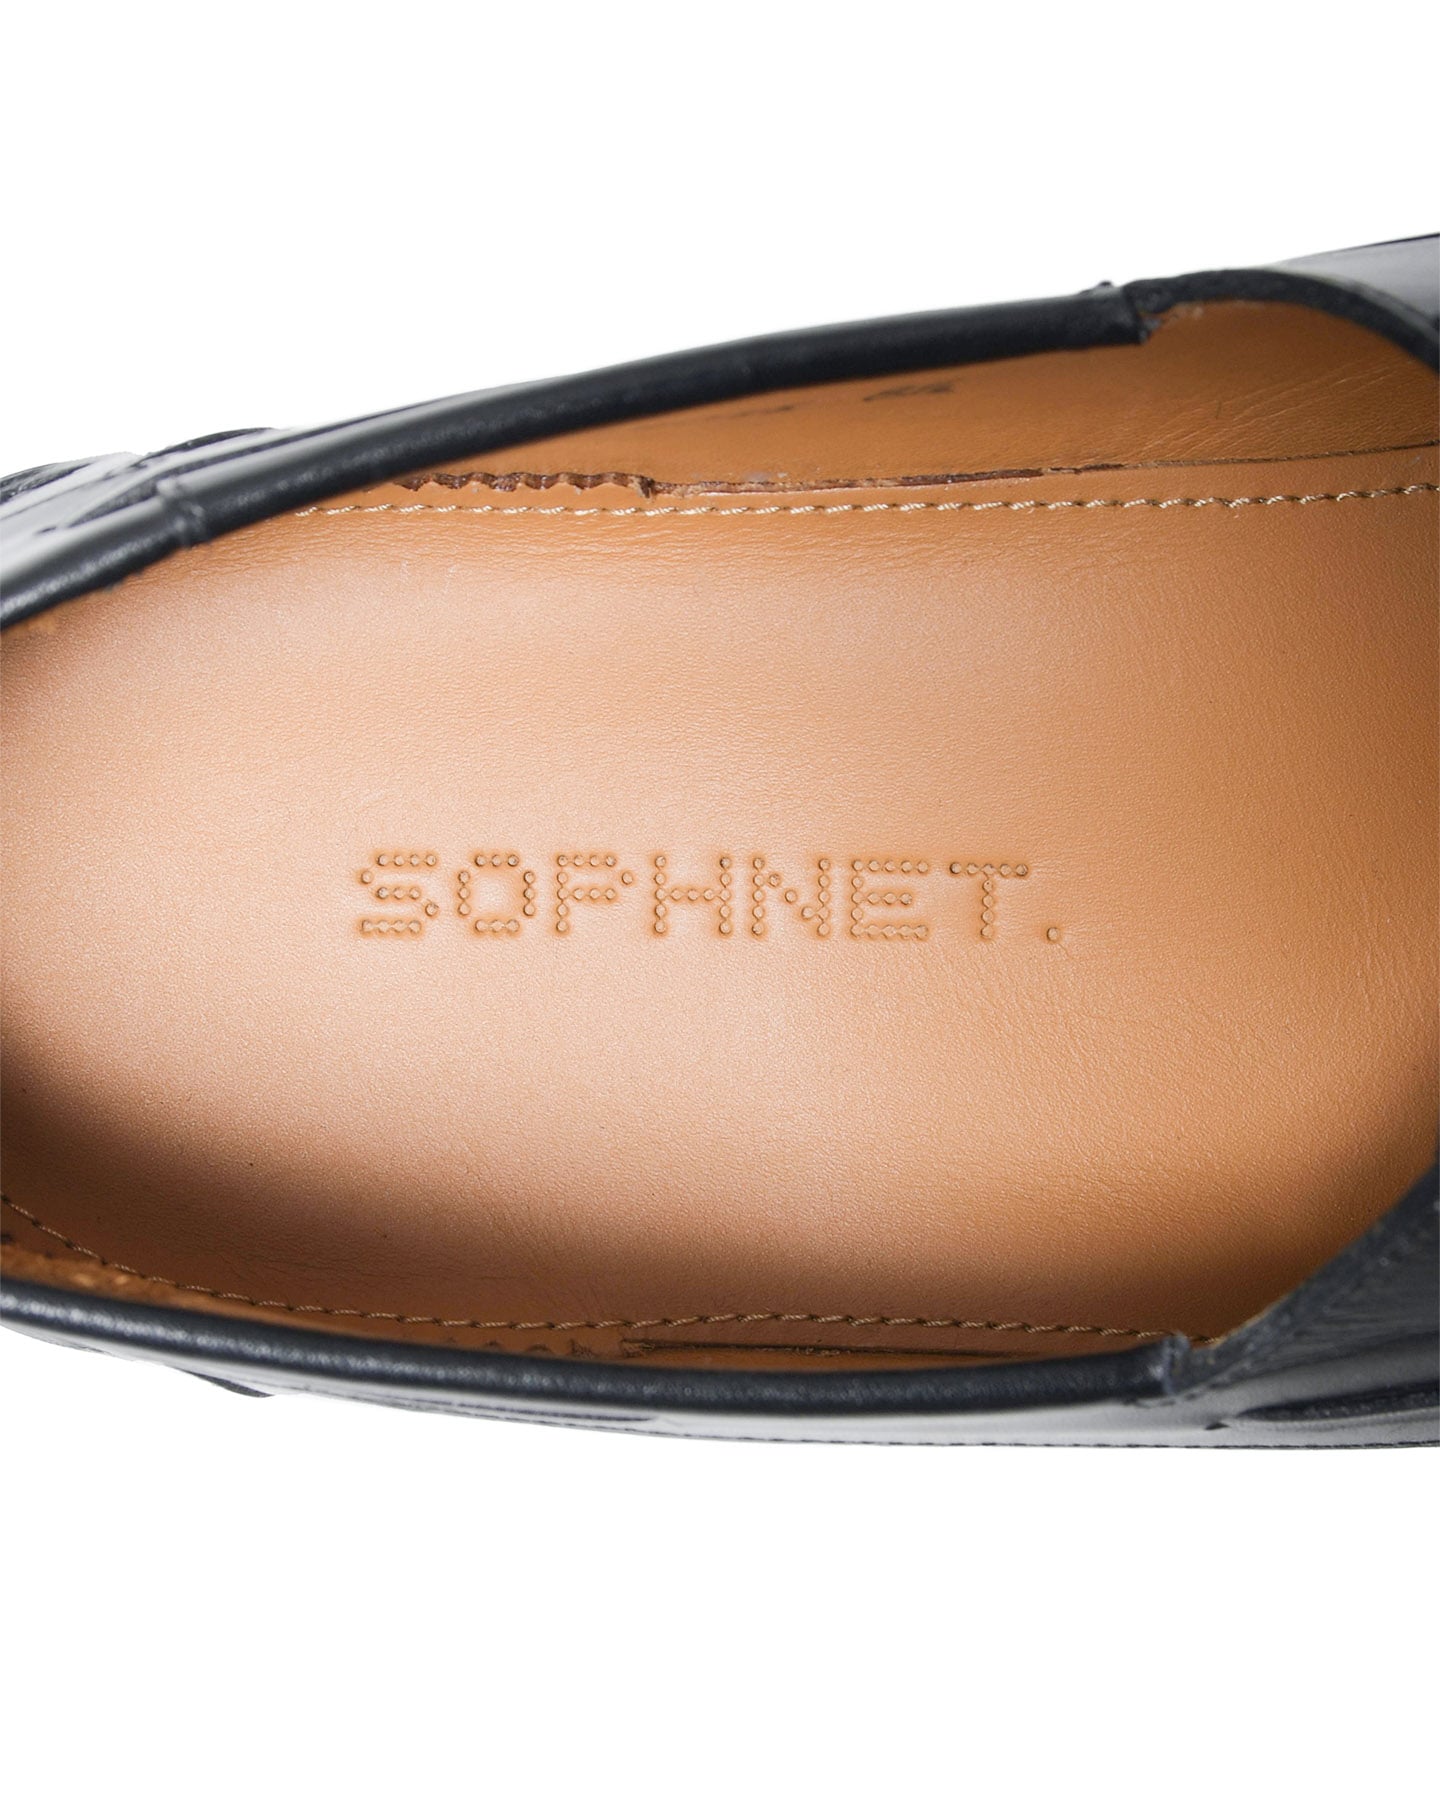 SOPH. | LEATHER BOAT SHOES(25cm BLACK):